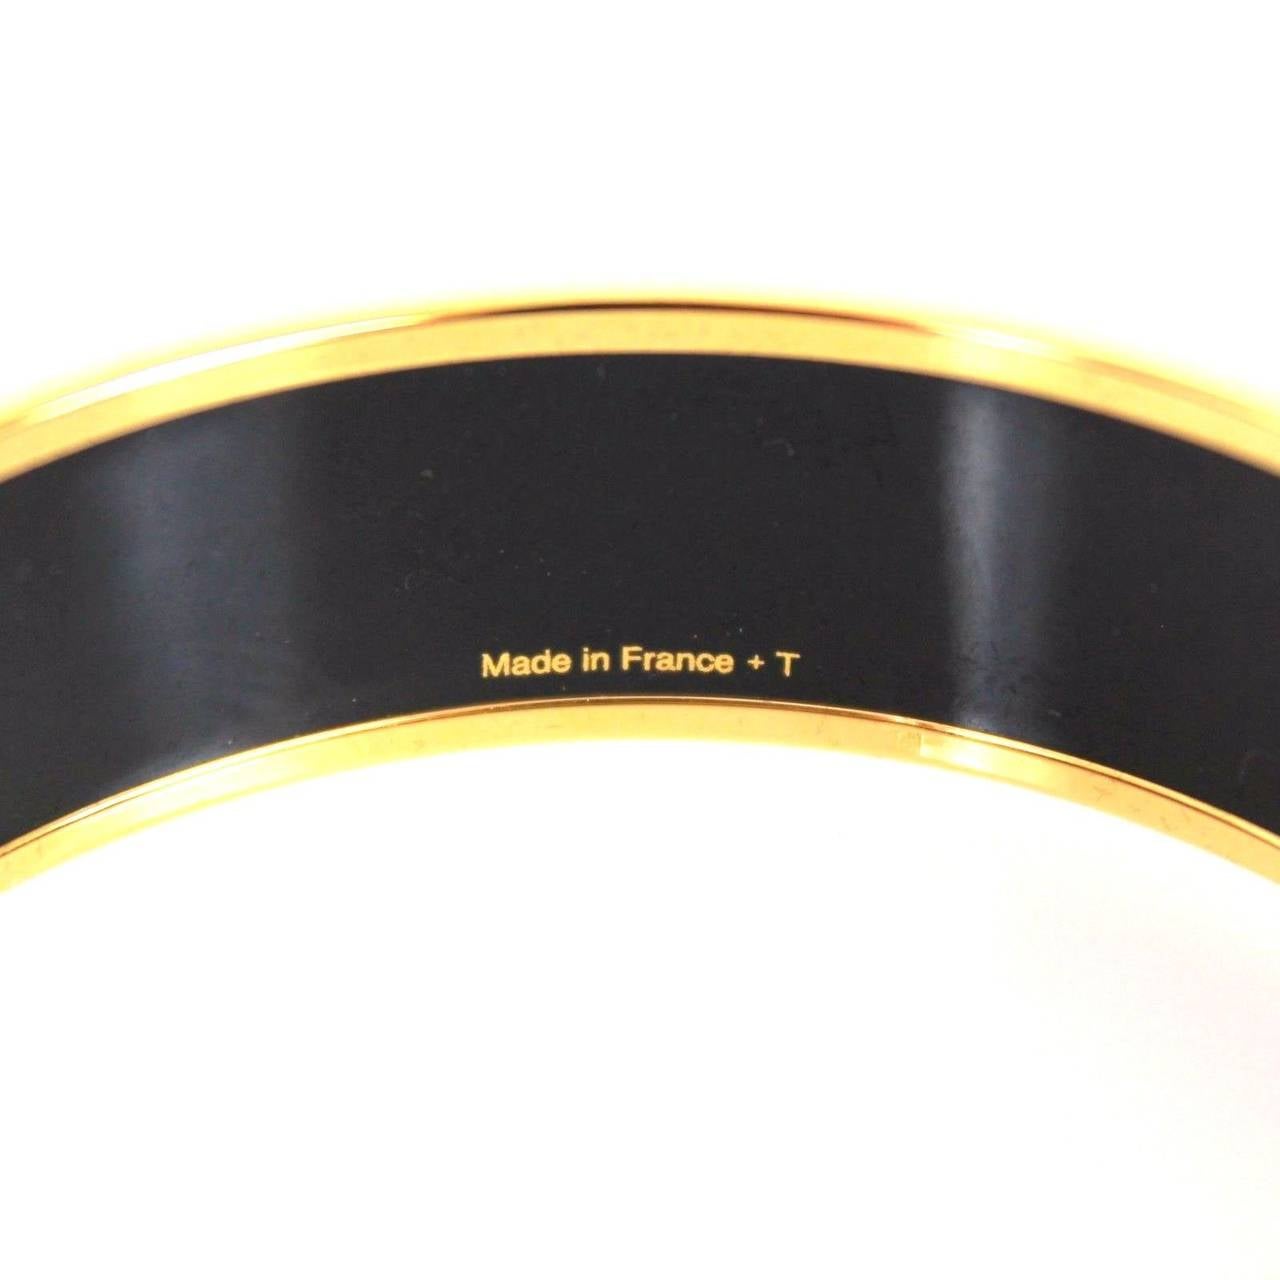 Hermes wide printed enamel bracelet

Gold plated, 1